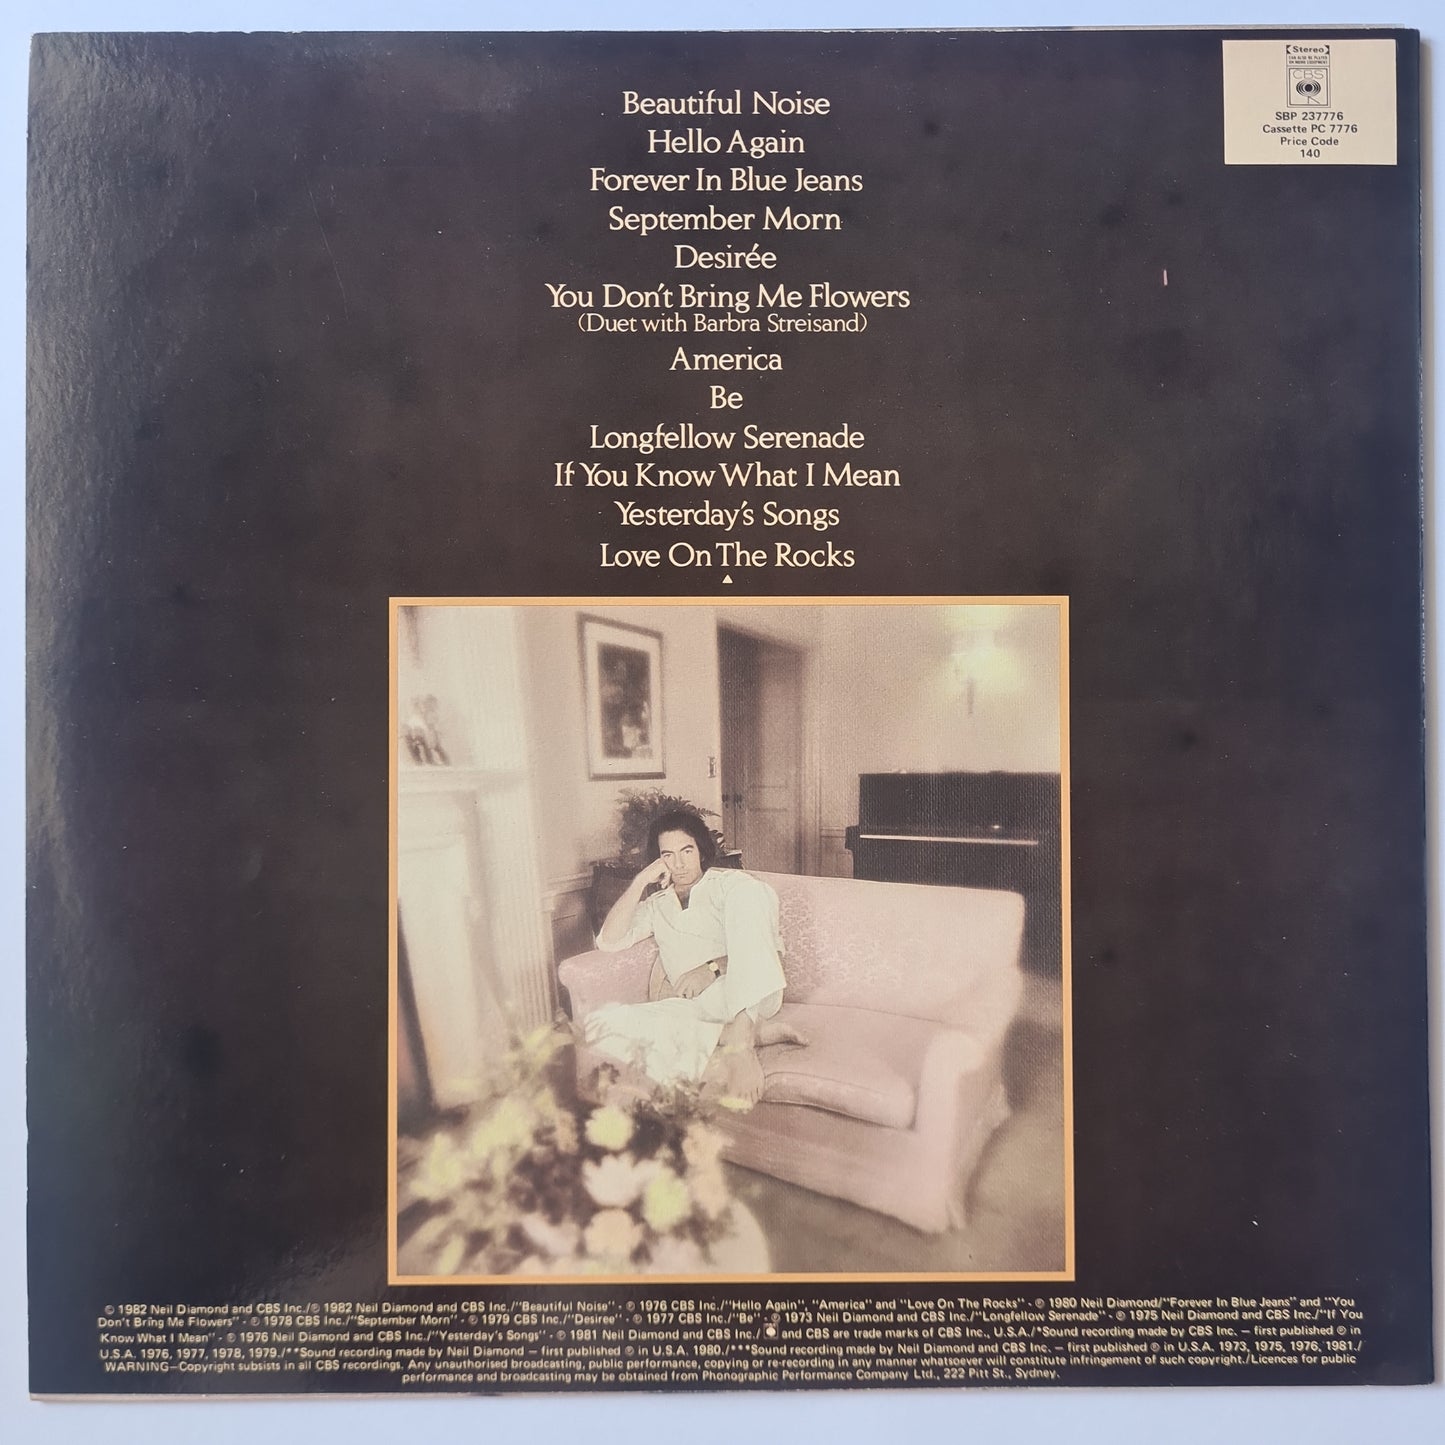 Neil Diamond – 12 Greatest Hits, Volume 2 - 1982 - Vinyl Record